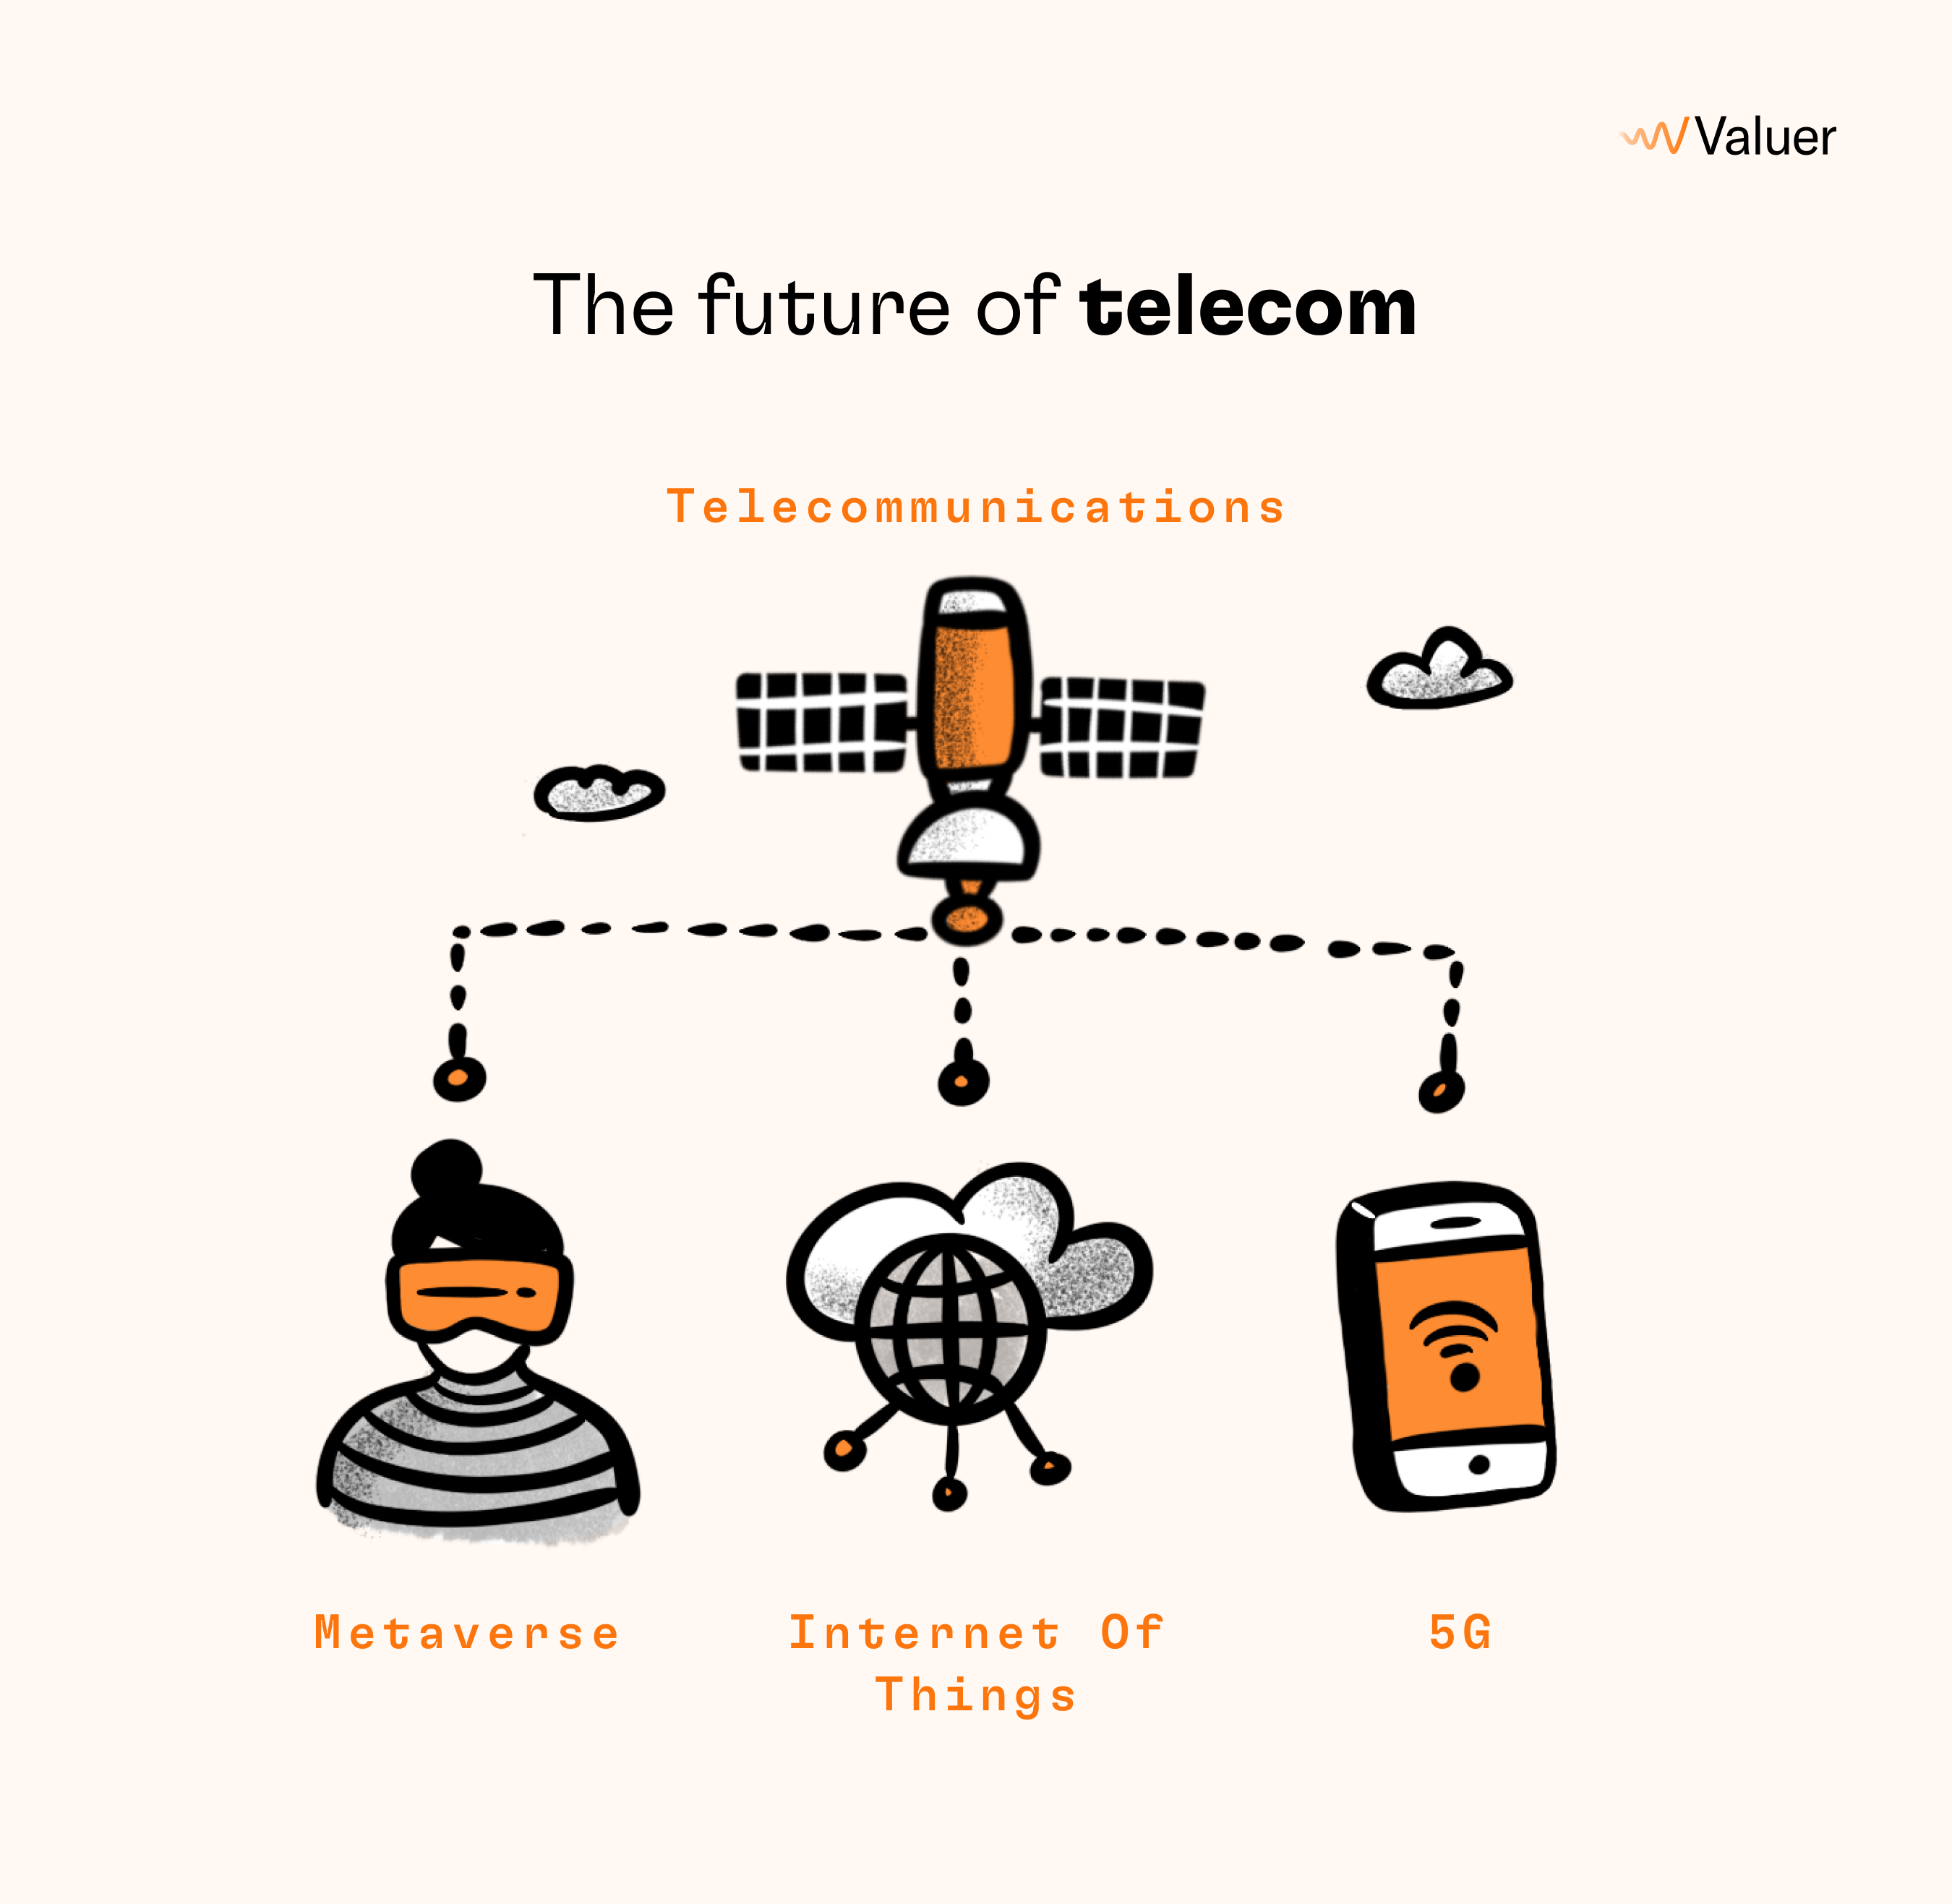 The future of telecom